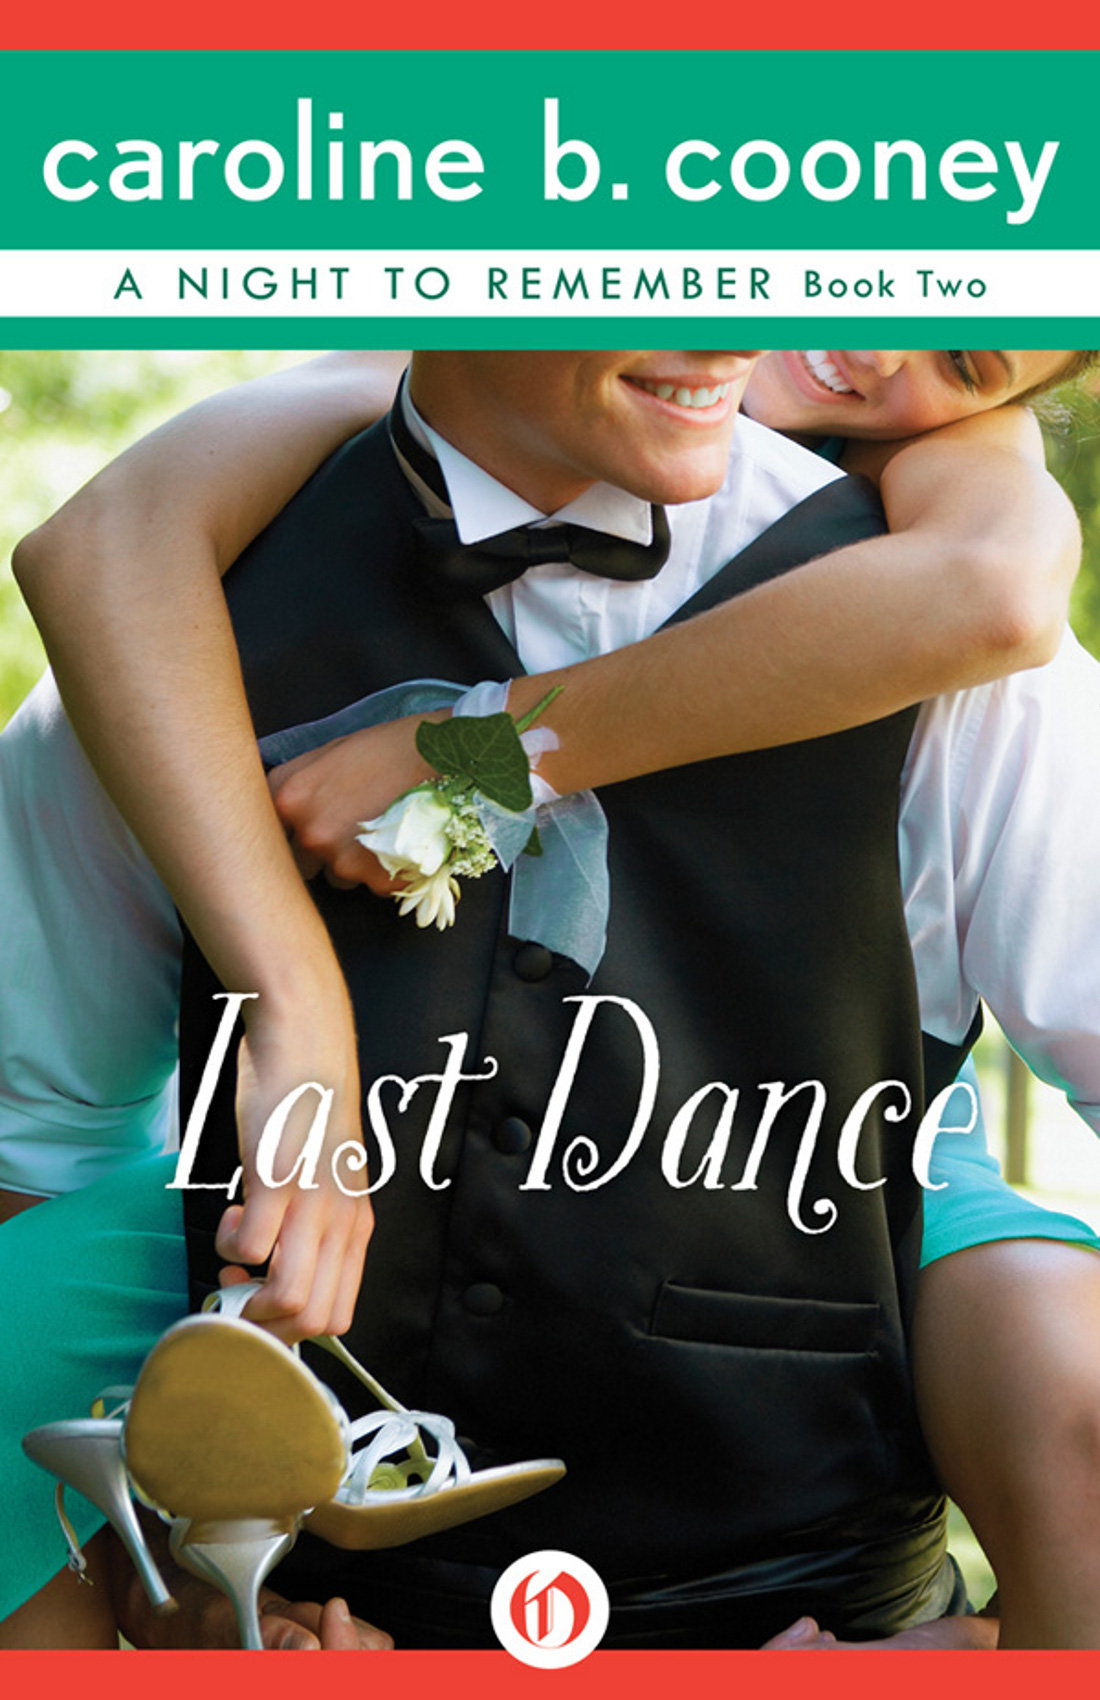 Last Dance by Caroline B. Cooney